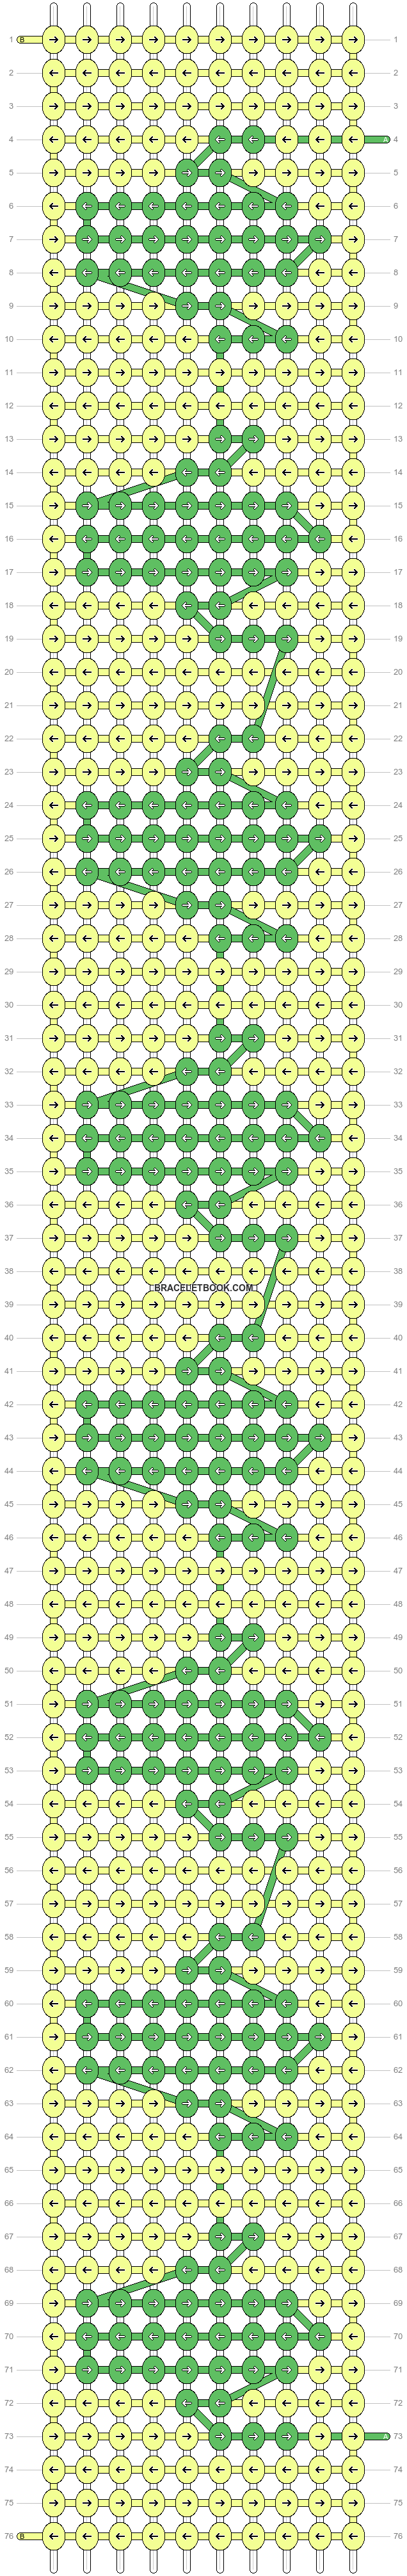 Alpha pattern #29322 variation #52226 pattern